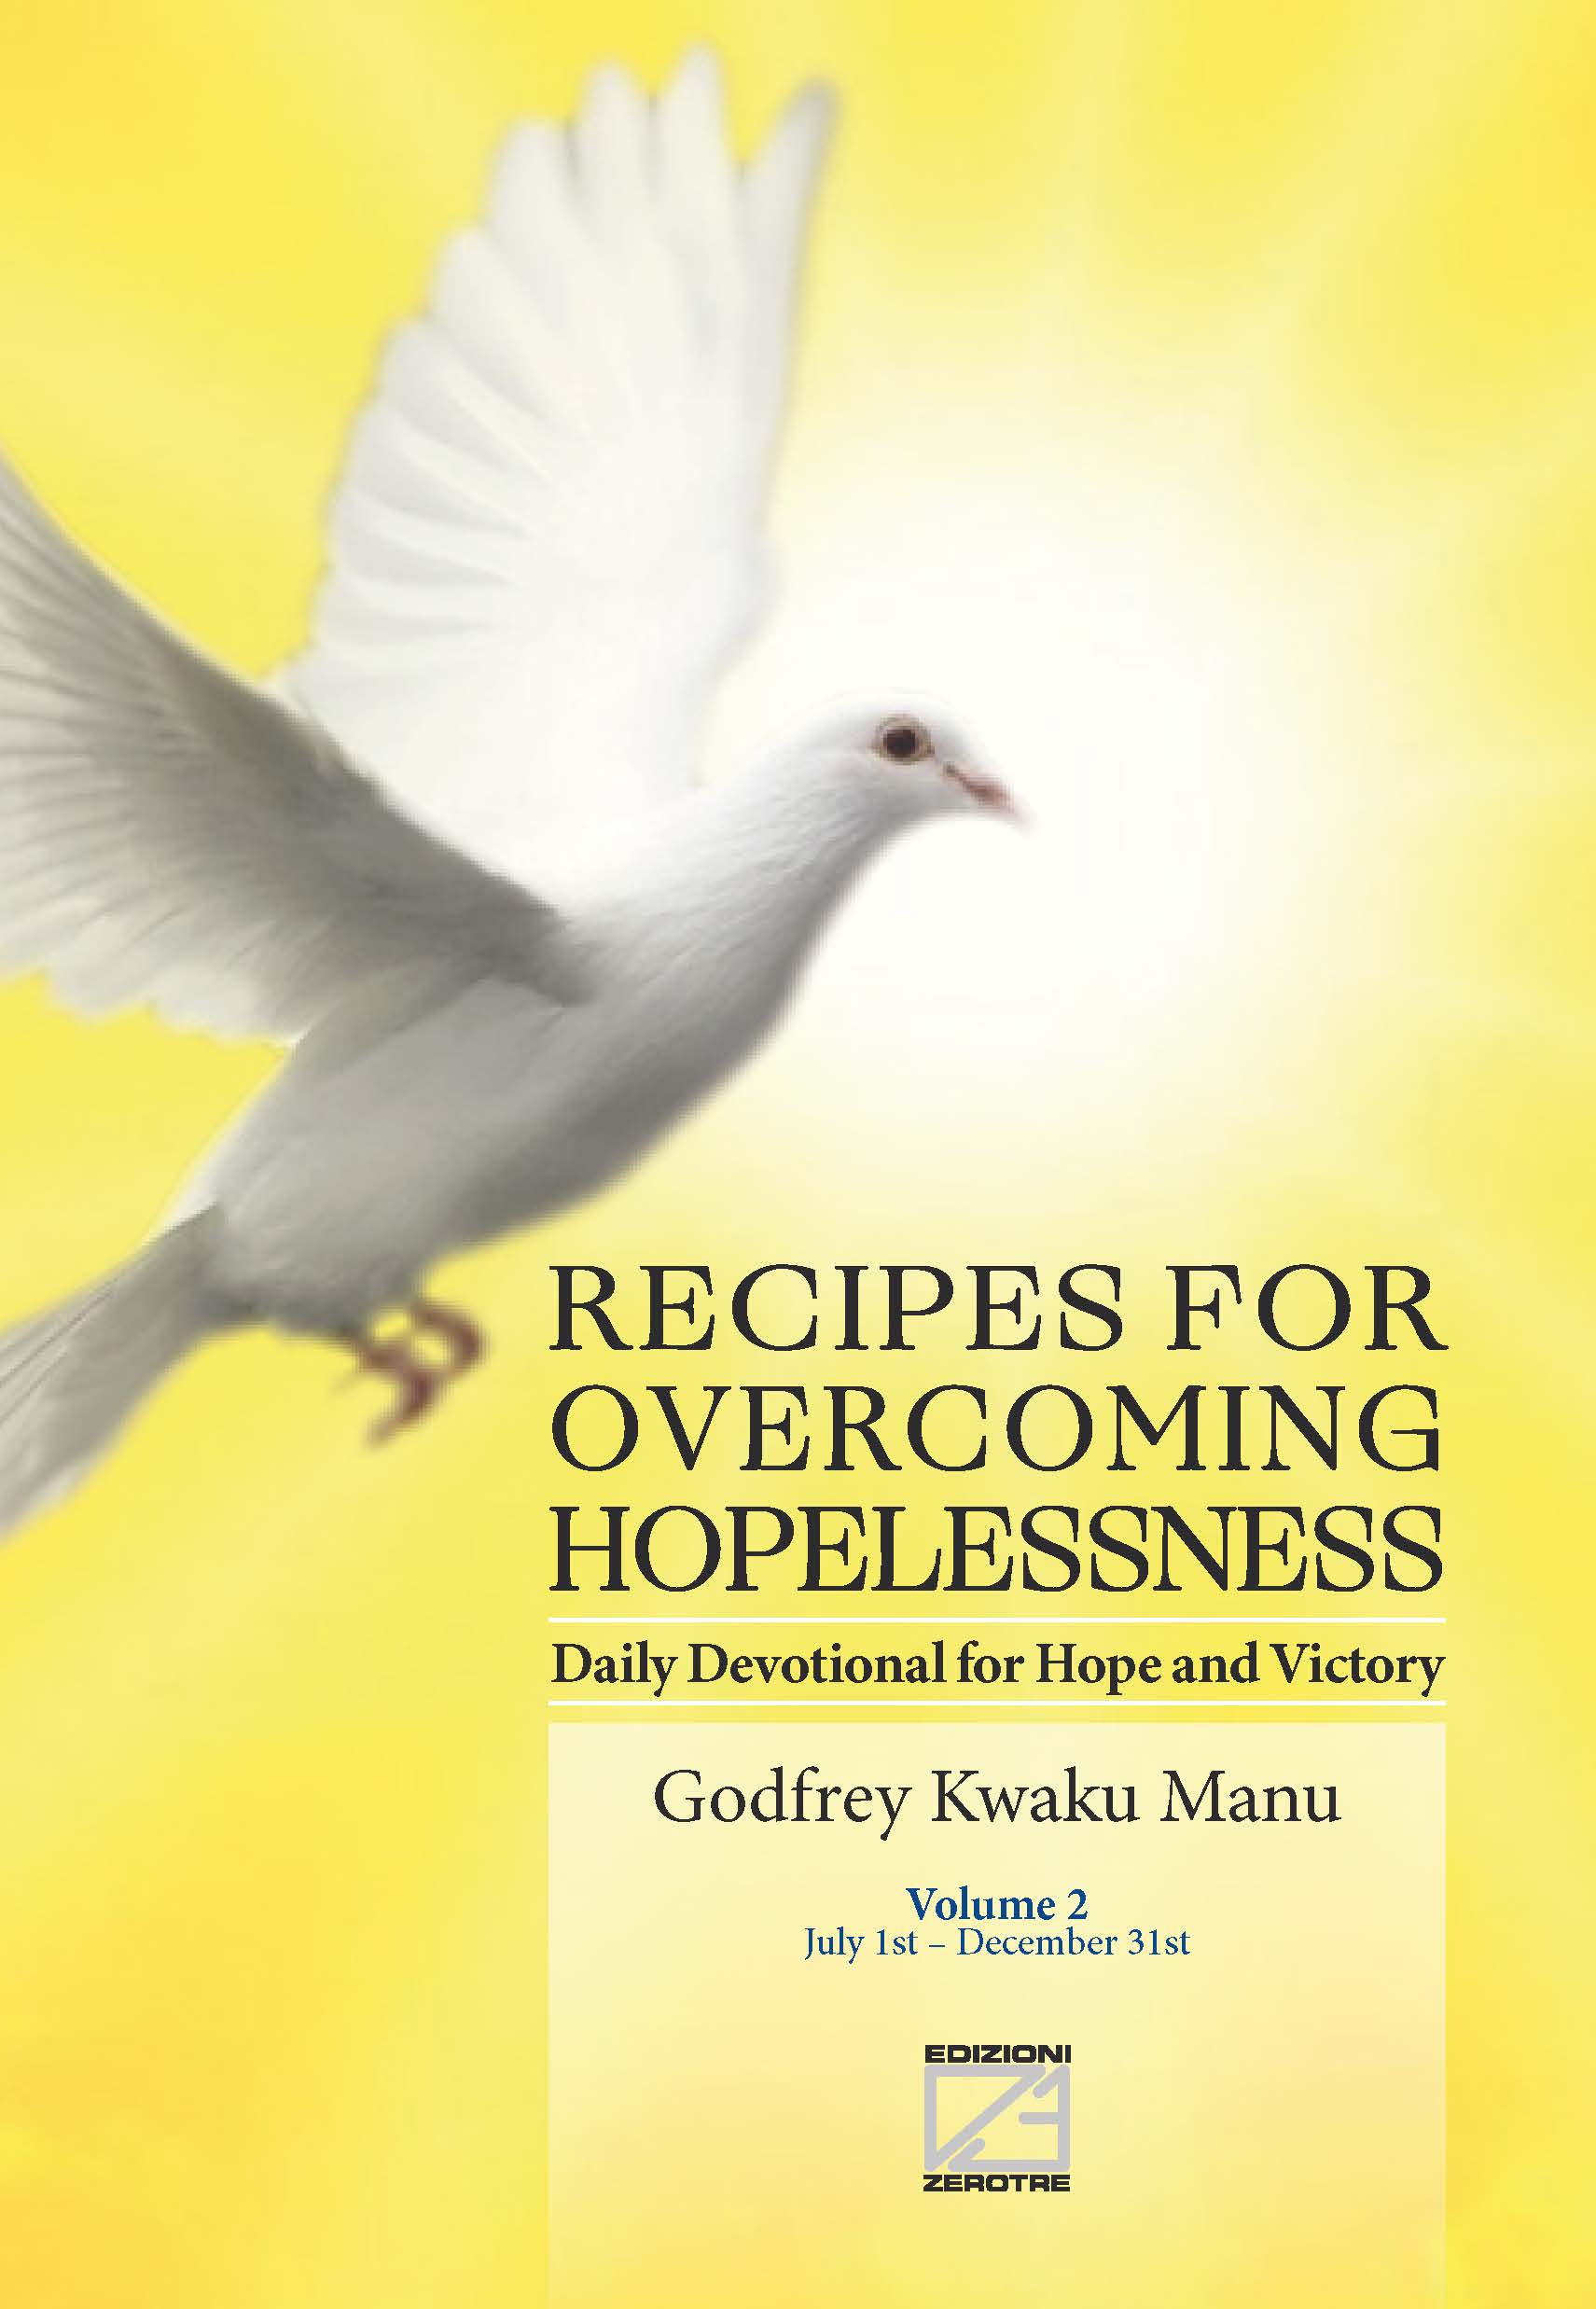 RECIPES FOR OVERCOMING HOPELESSNESS 2